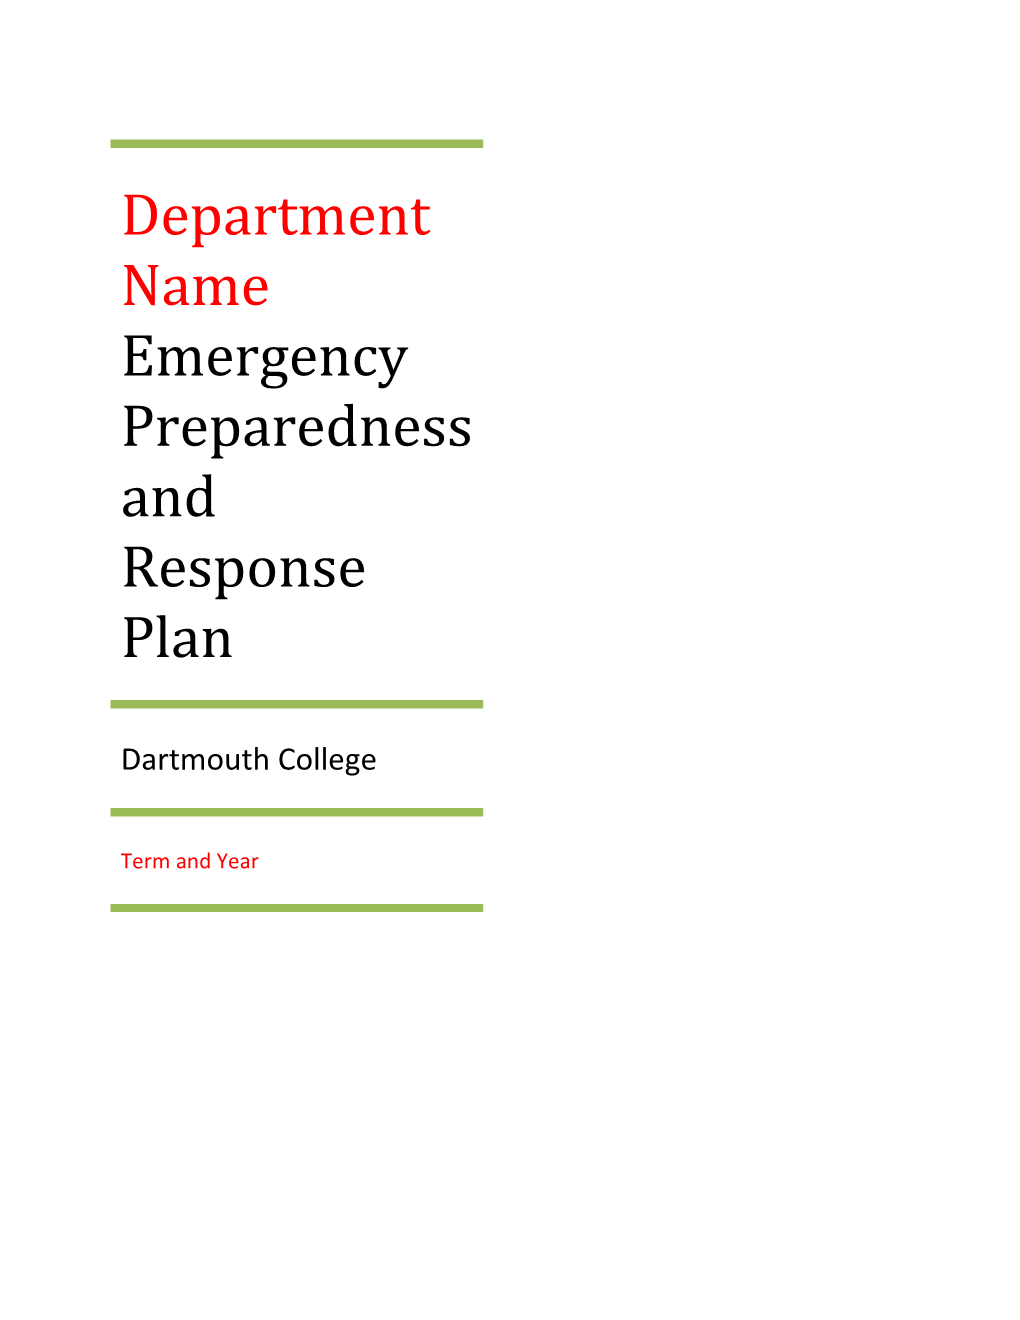 Emergency Preparedness and Response Plan